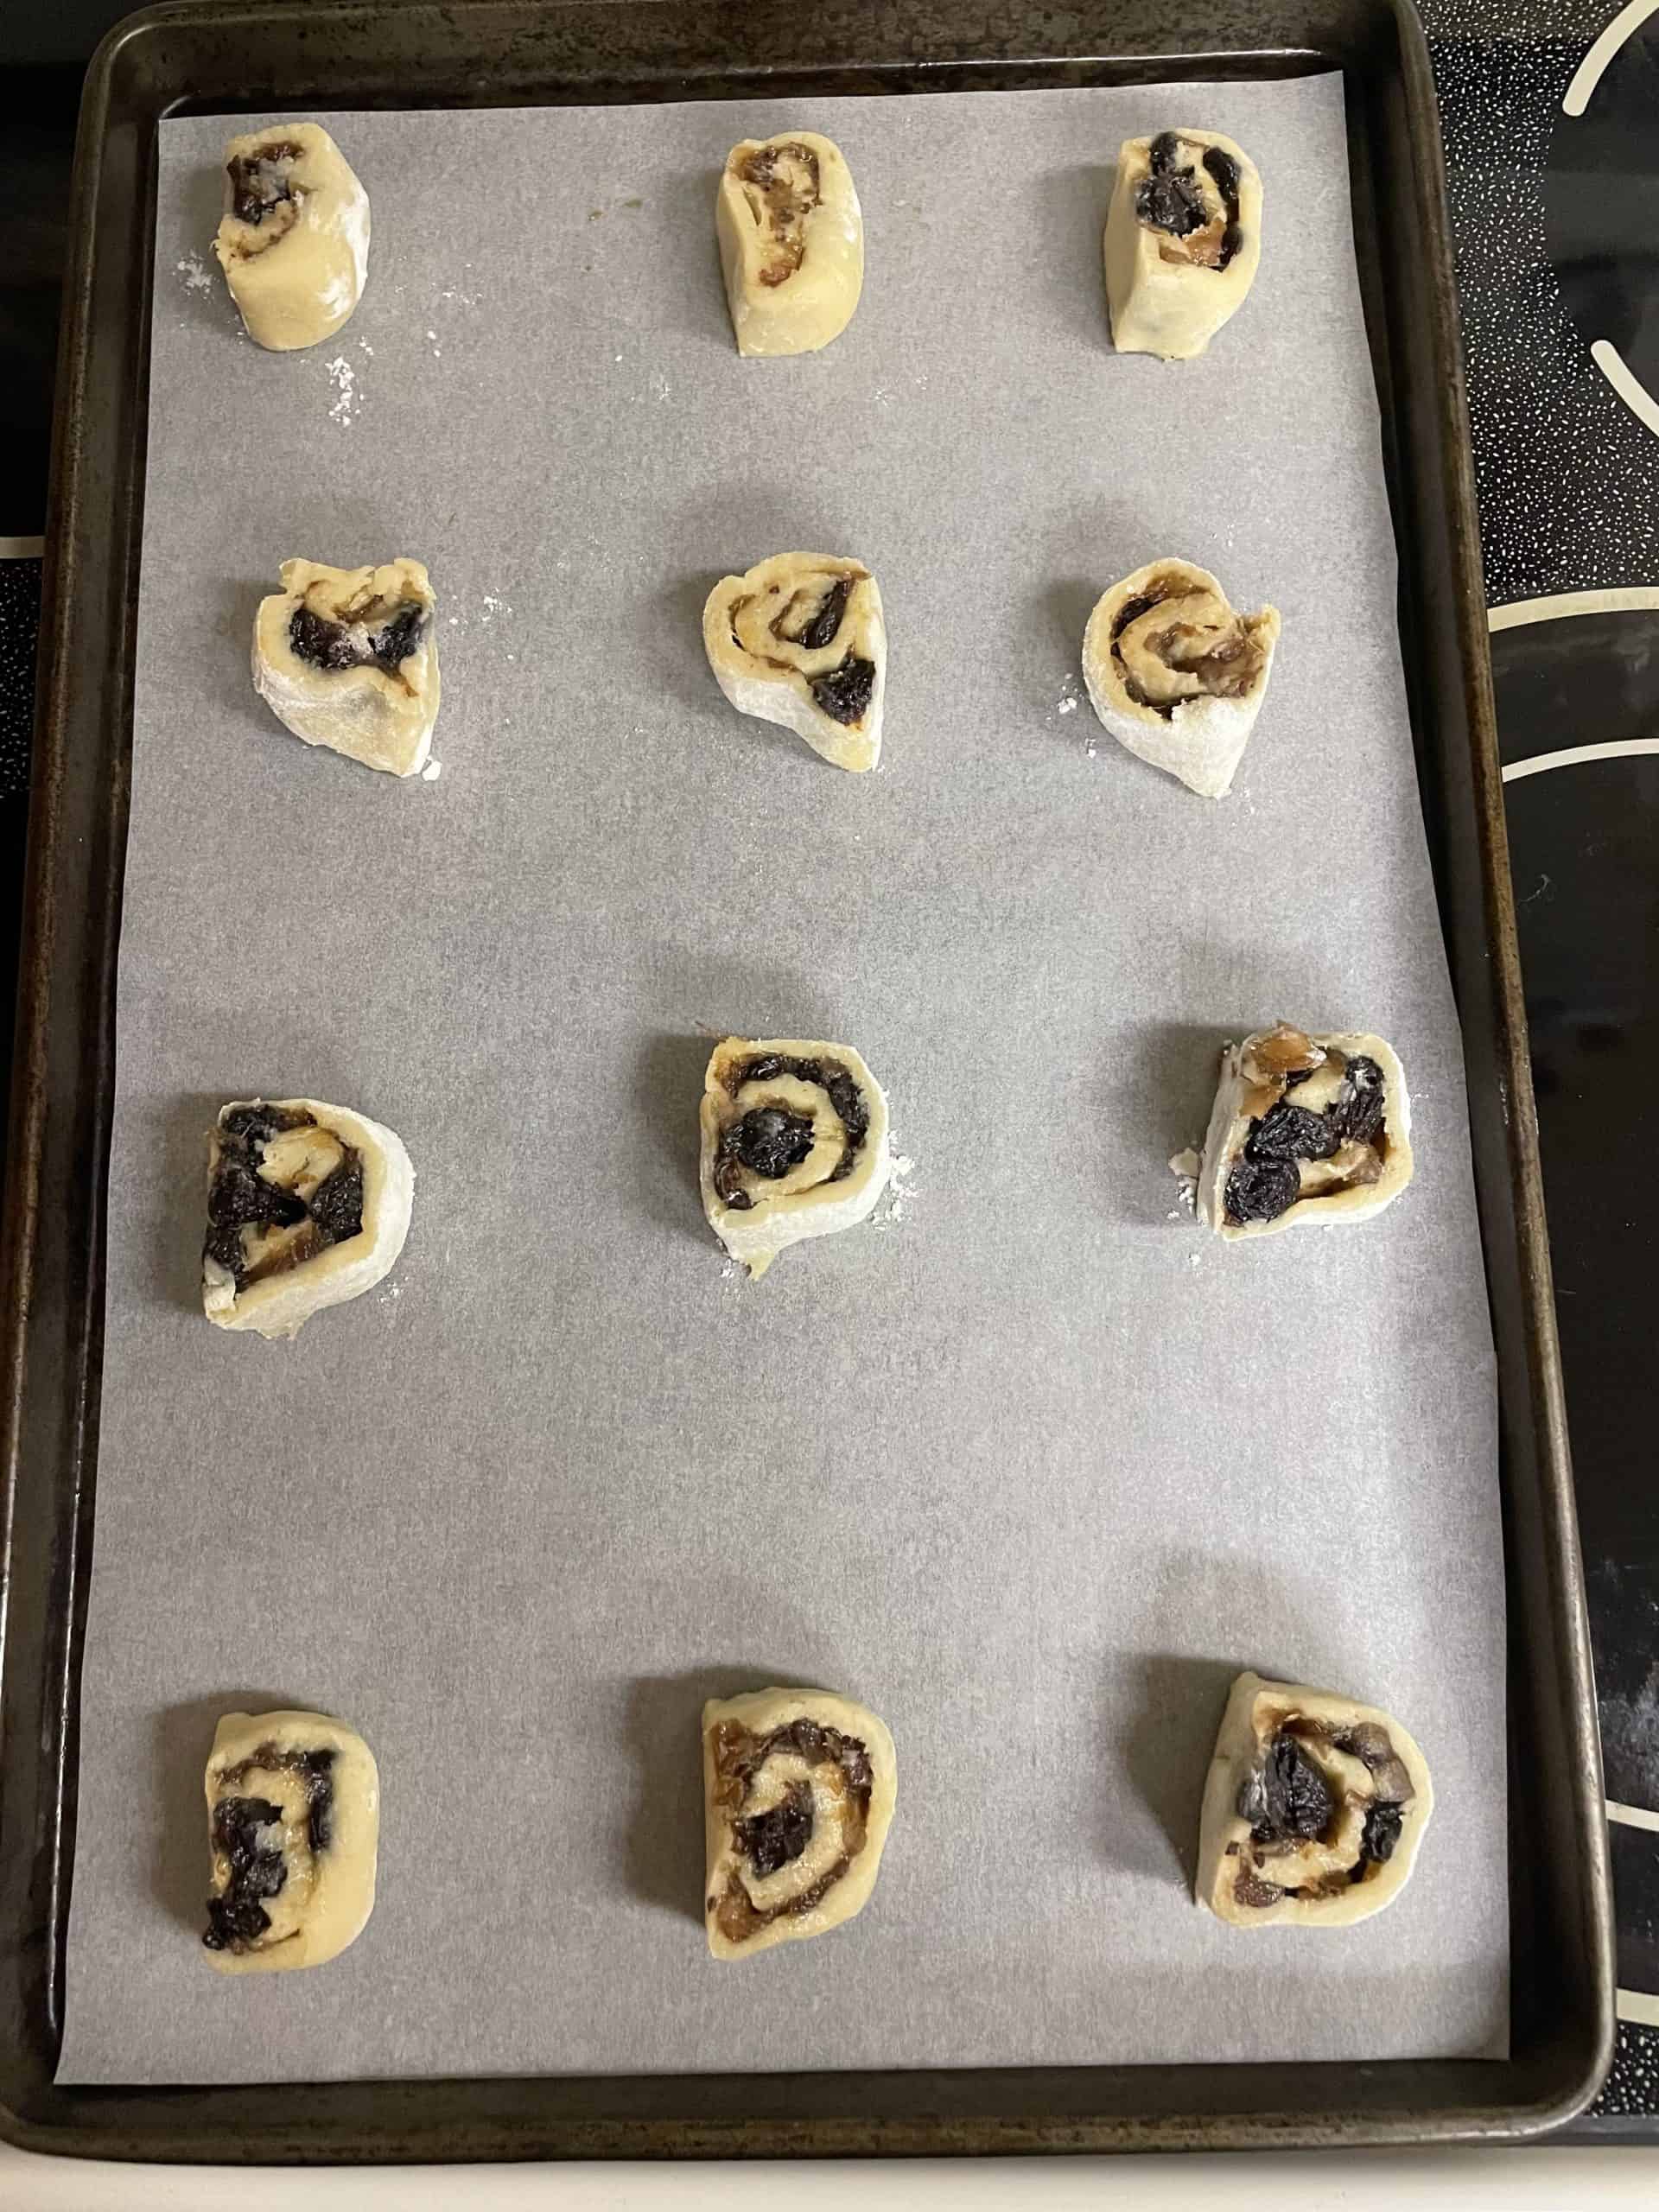 Sheet pan of filled date cookies.